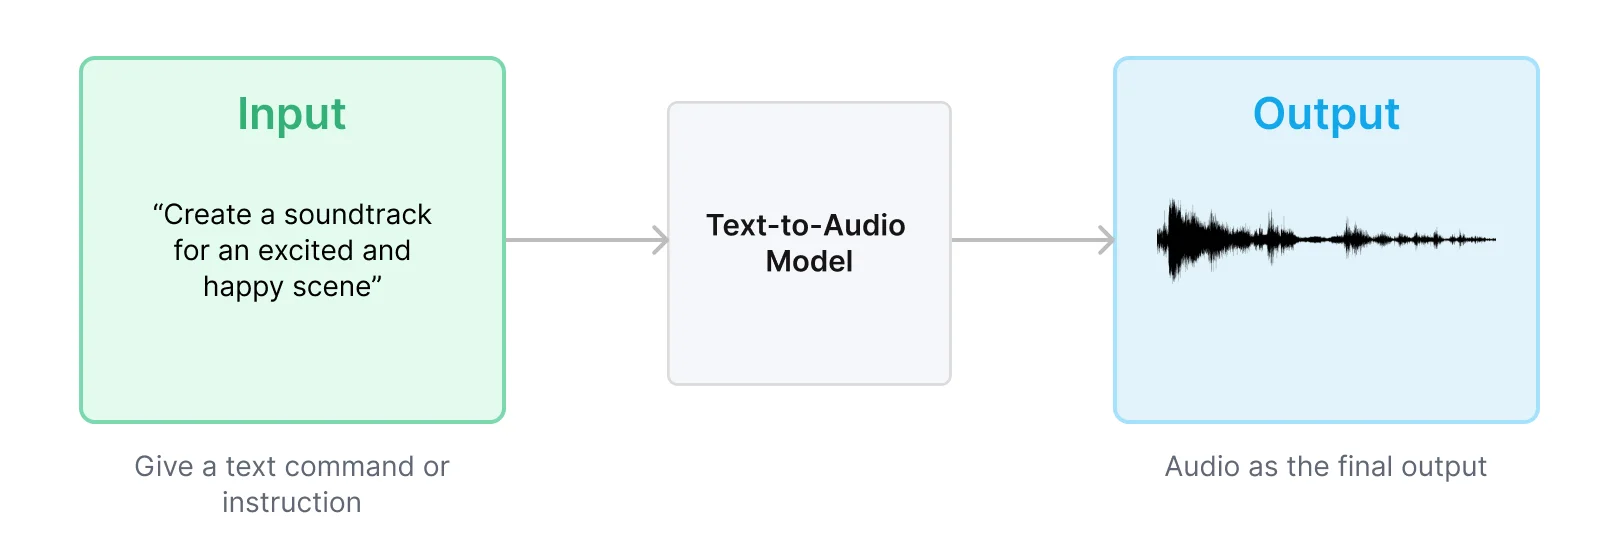 text to audio model example